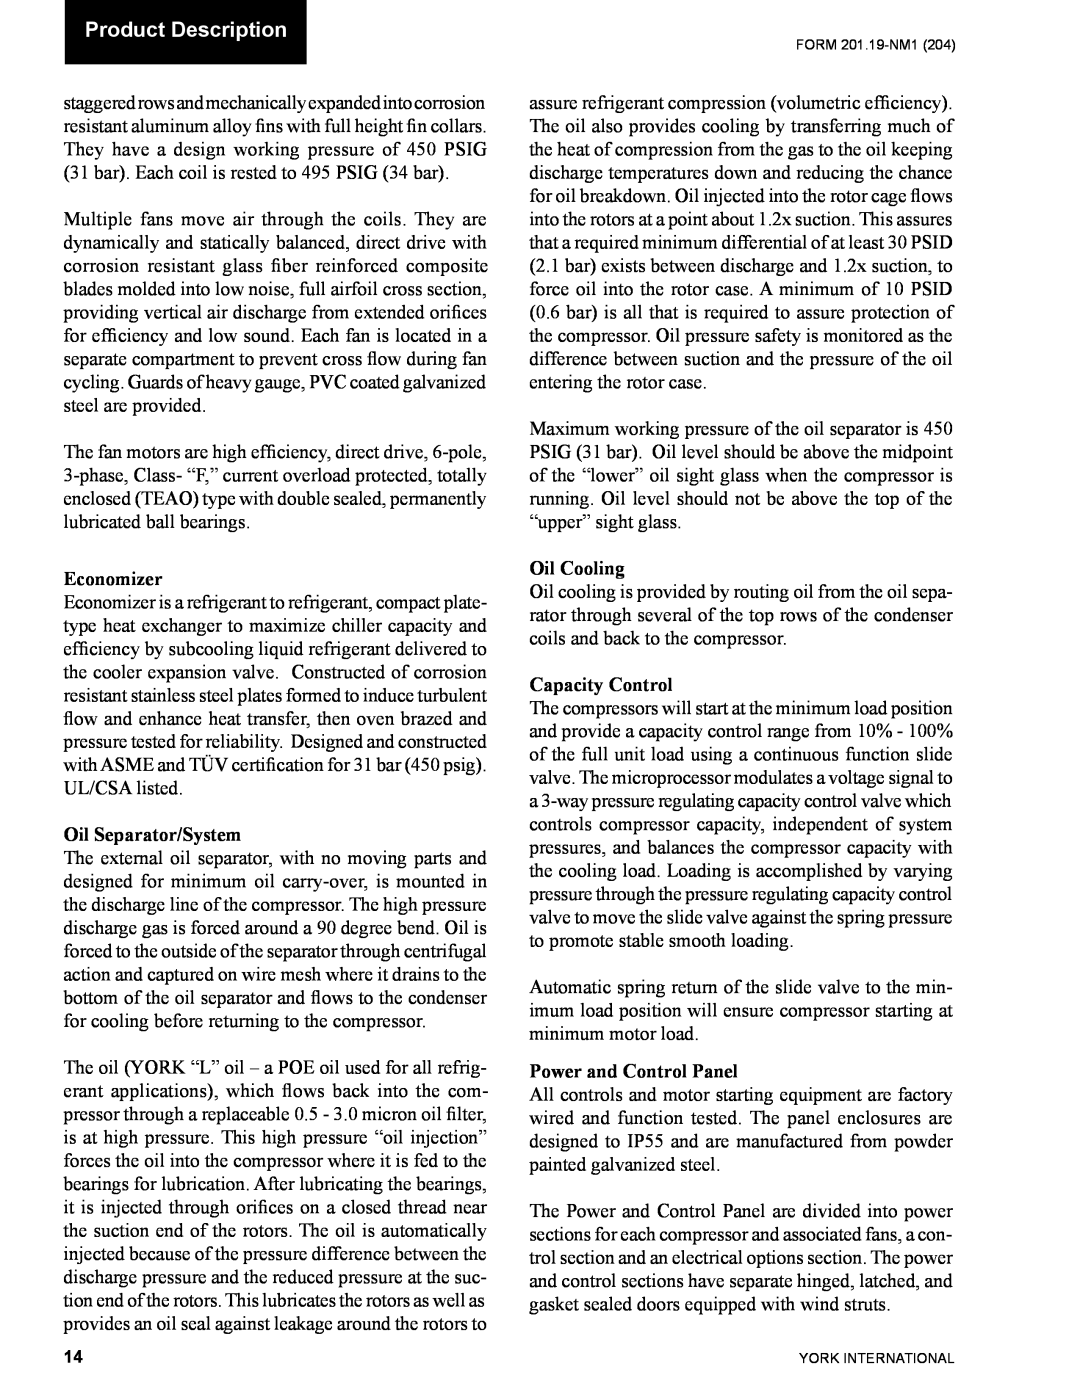 York YCAS0130 manual Product Description, Economizer, Oil Separator/System, Oil Cooling, Capacity Control 